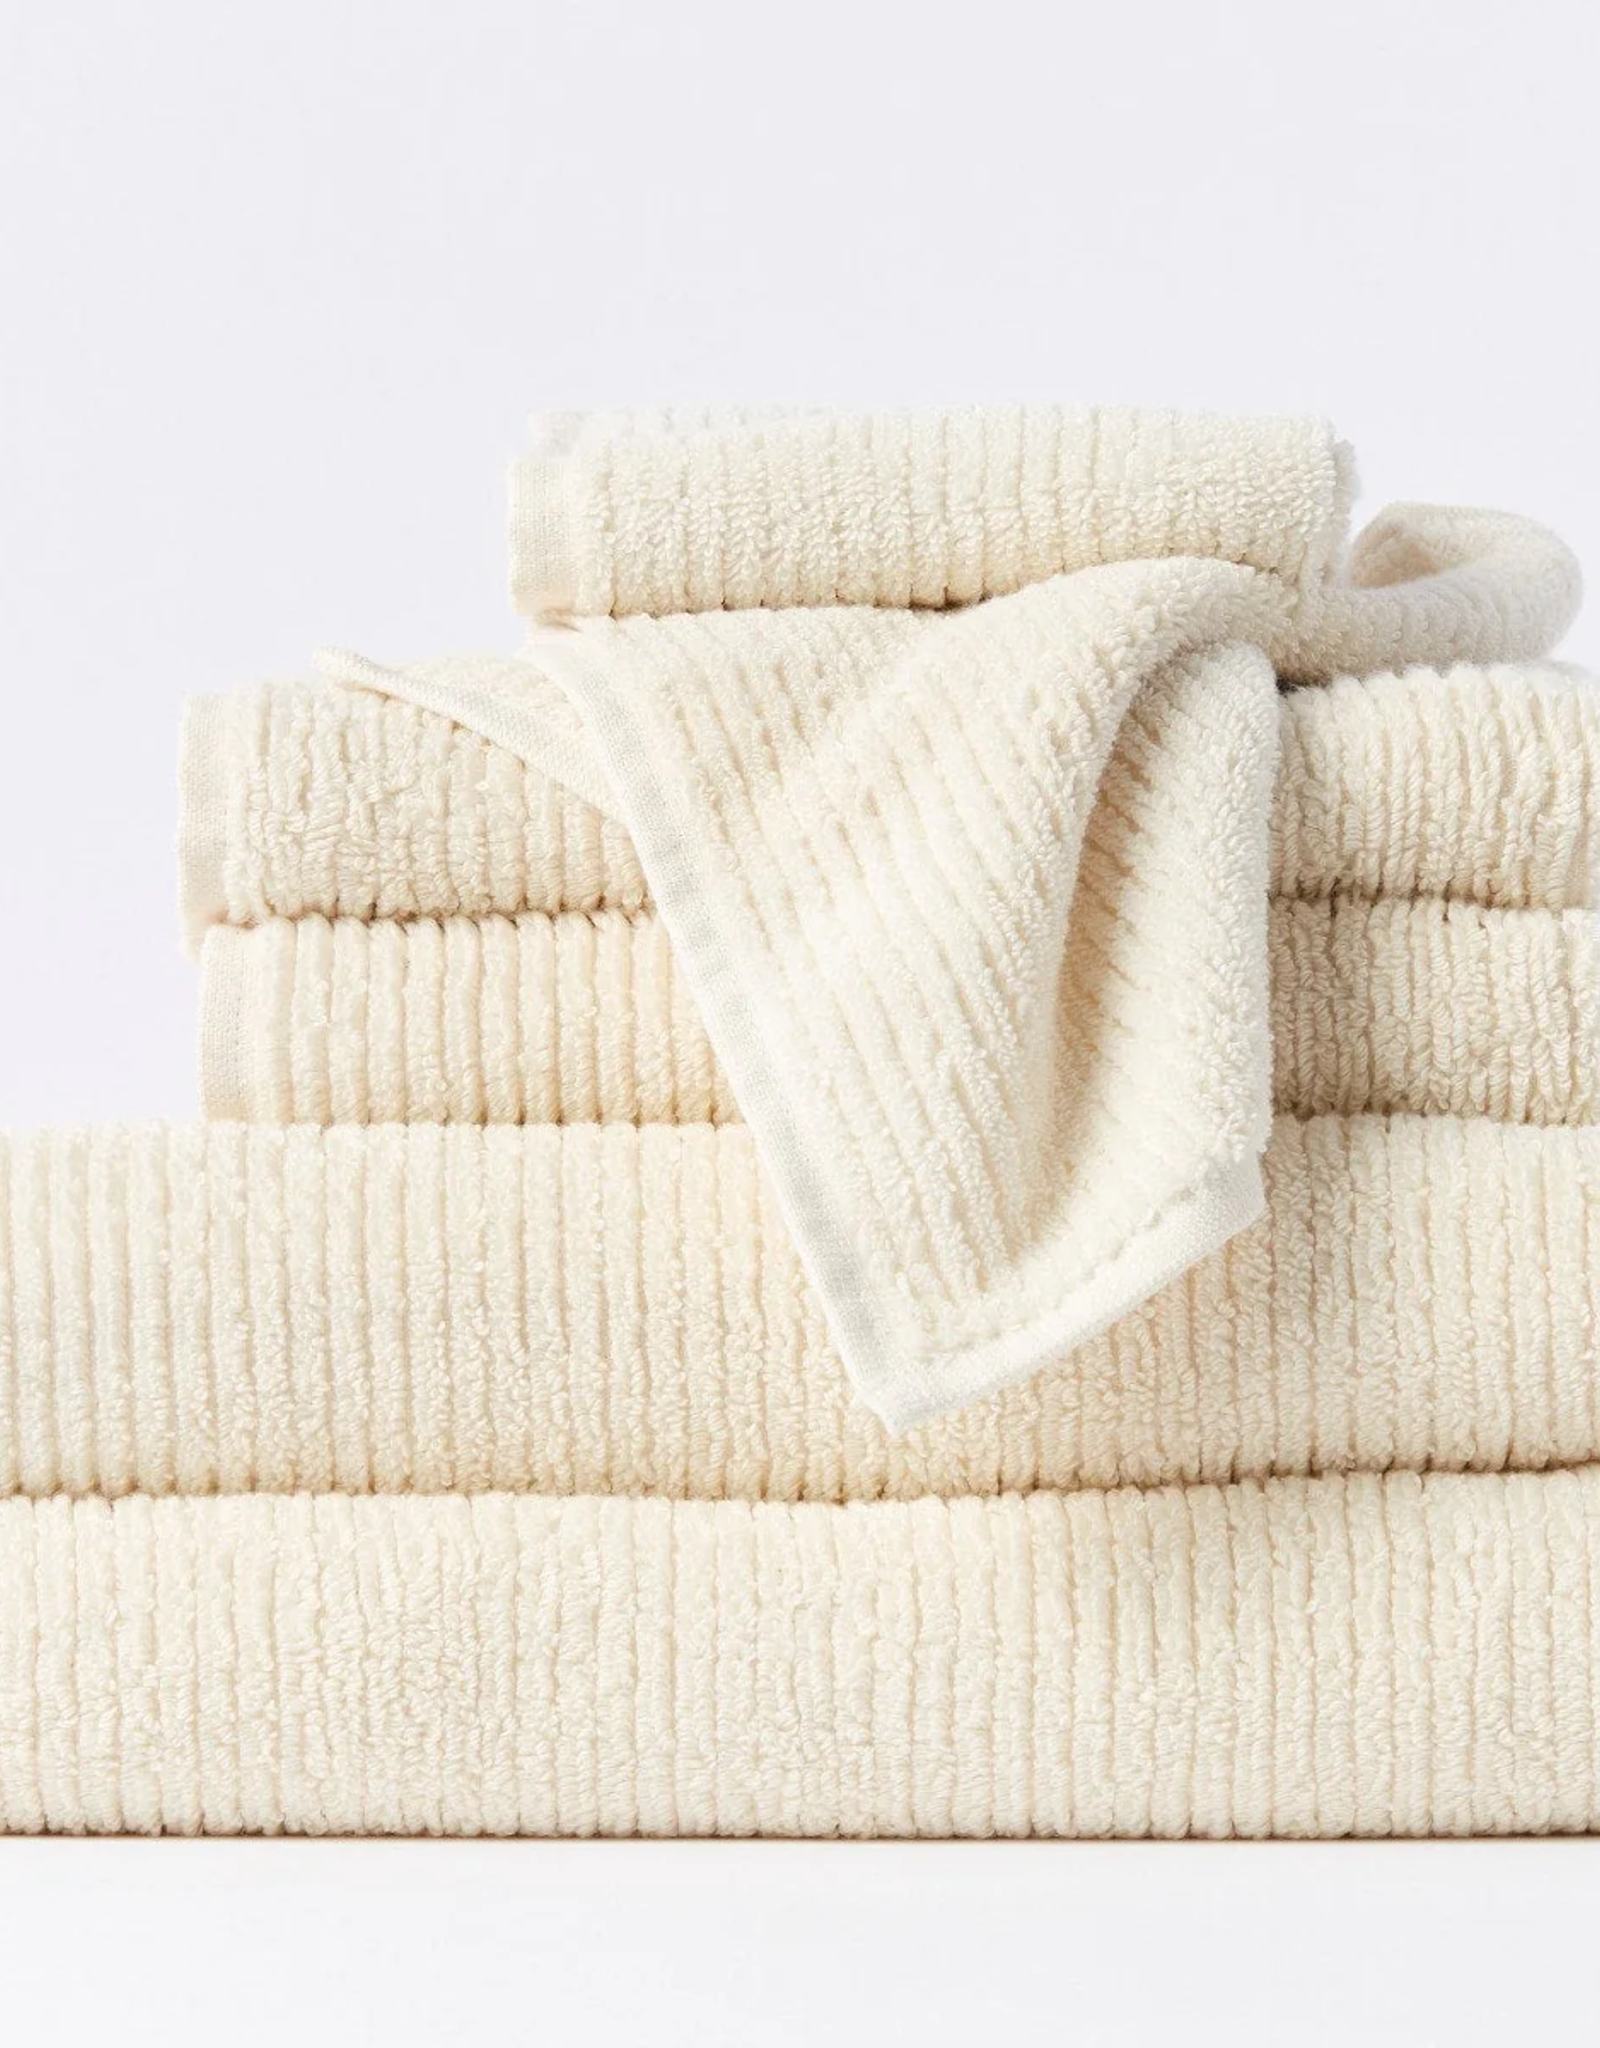 Temescal 6pc Towel Set- Undyed